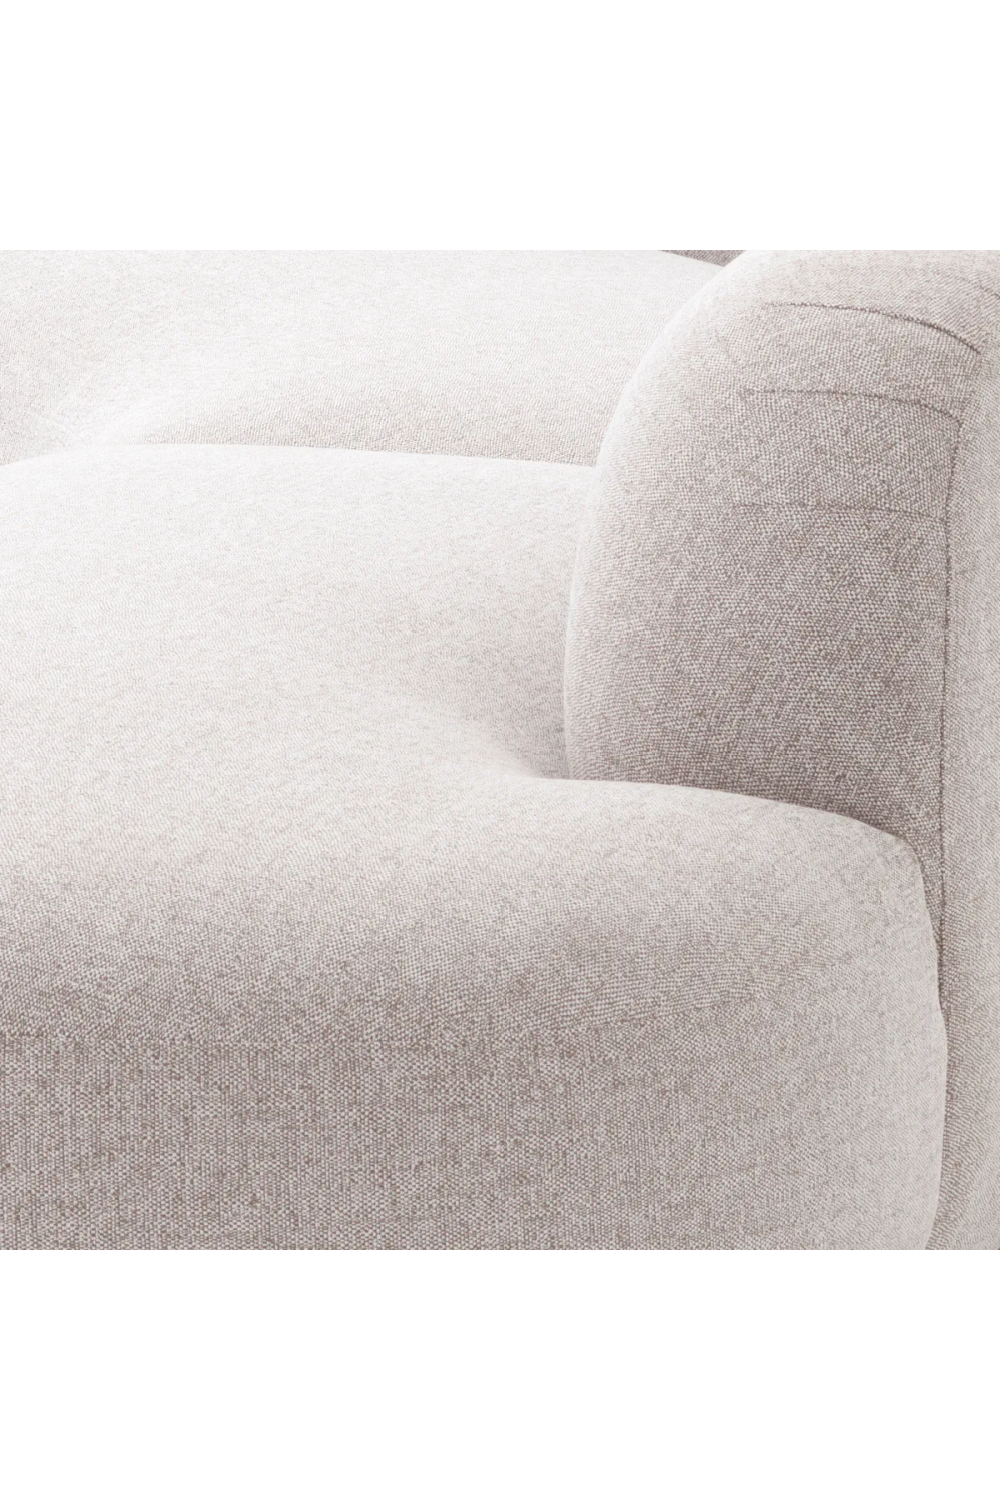 Light Gray Curved Outdoor Sofa | Eichholtz Björn | Oroa.com